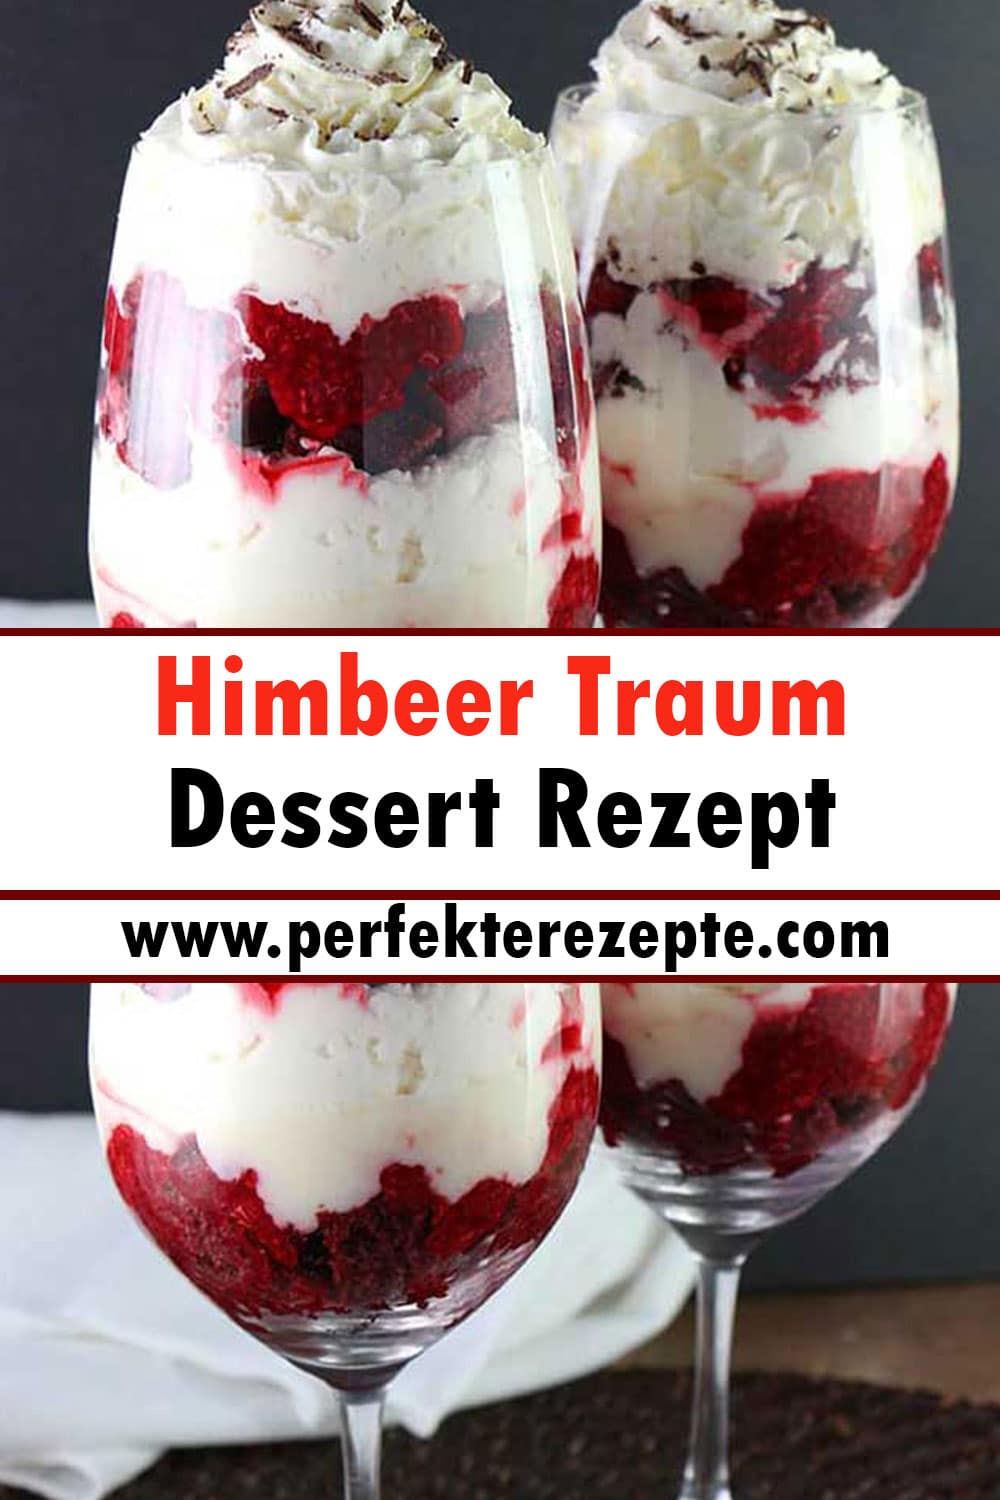 Himbeer Traum Dessert Rezept